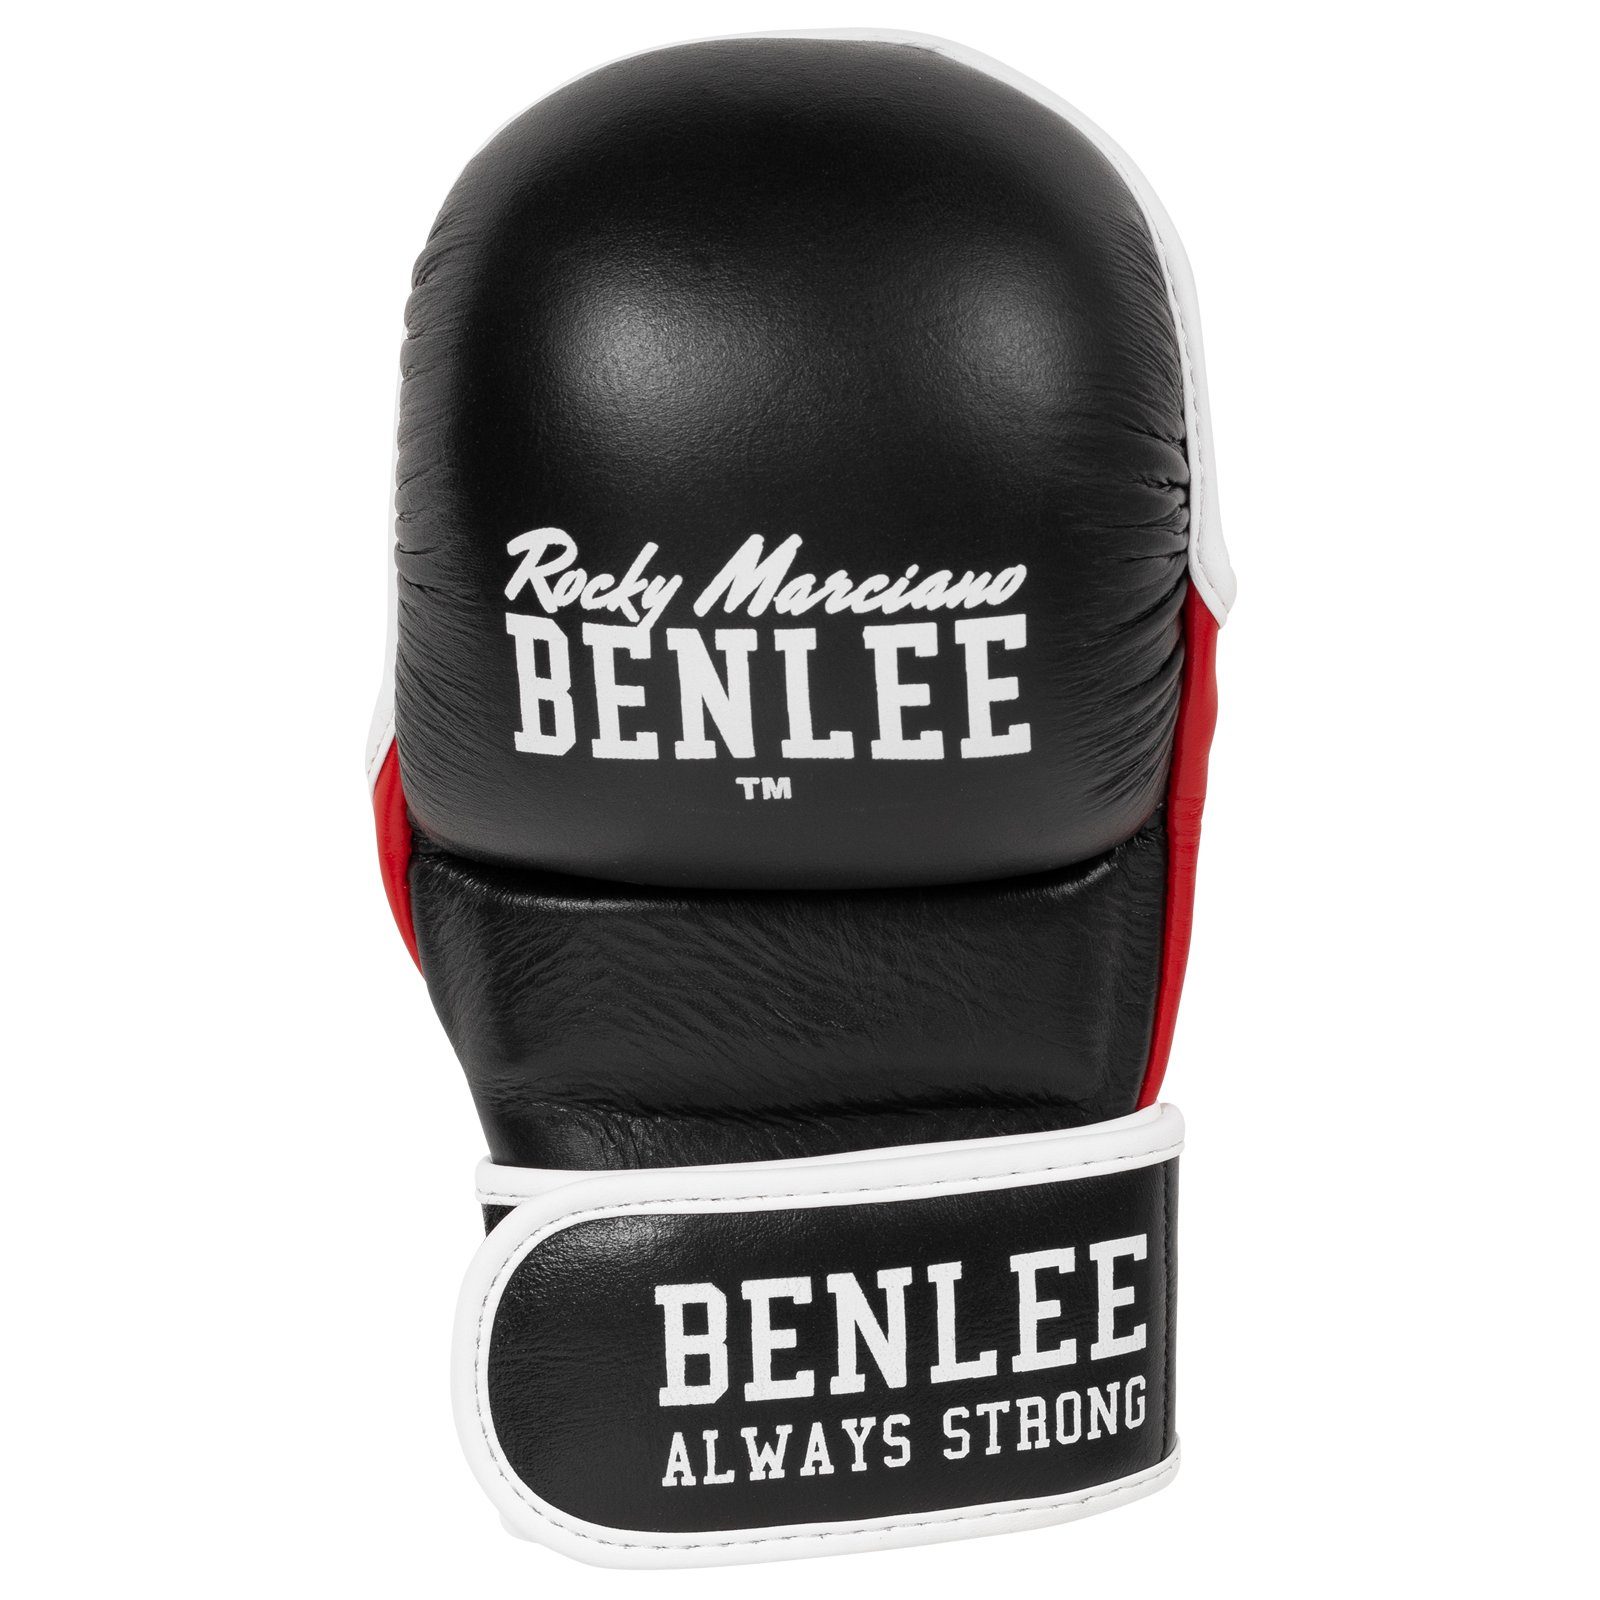 Benlee Rocky Marciano Boxhandschuhe STRIKER